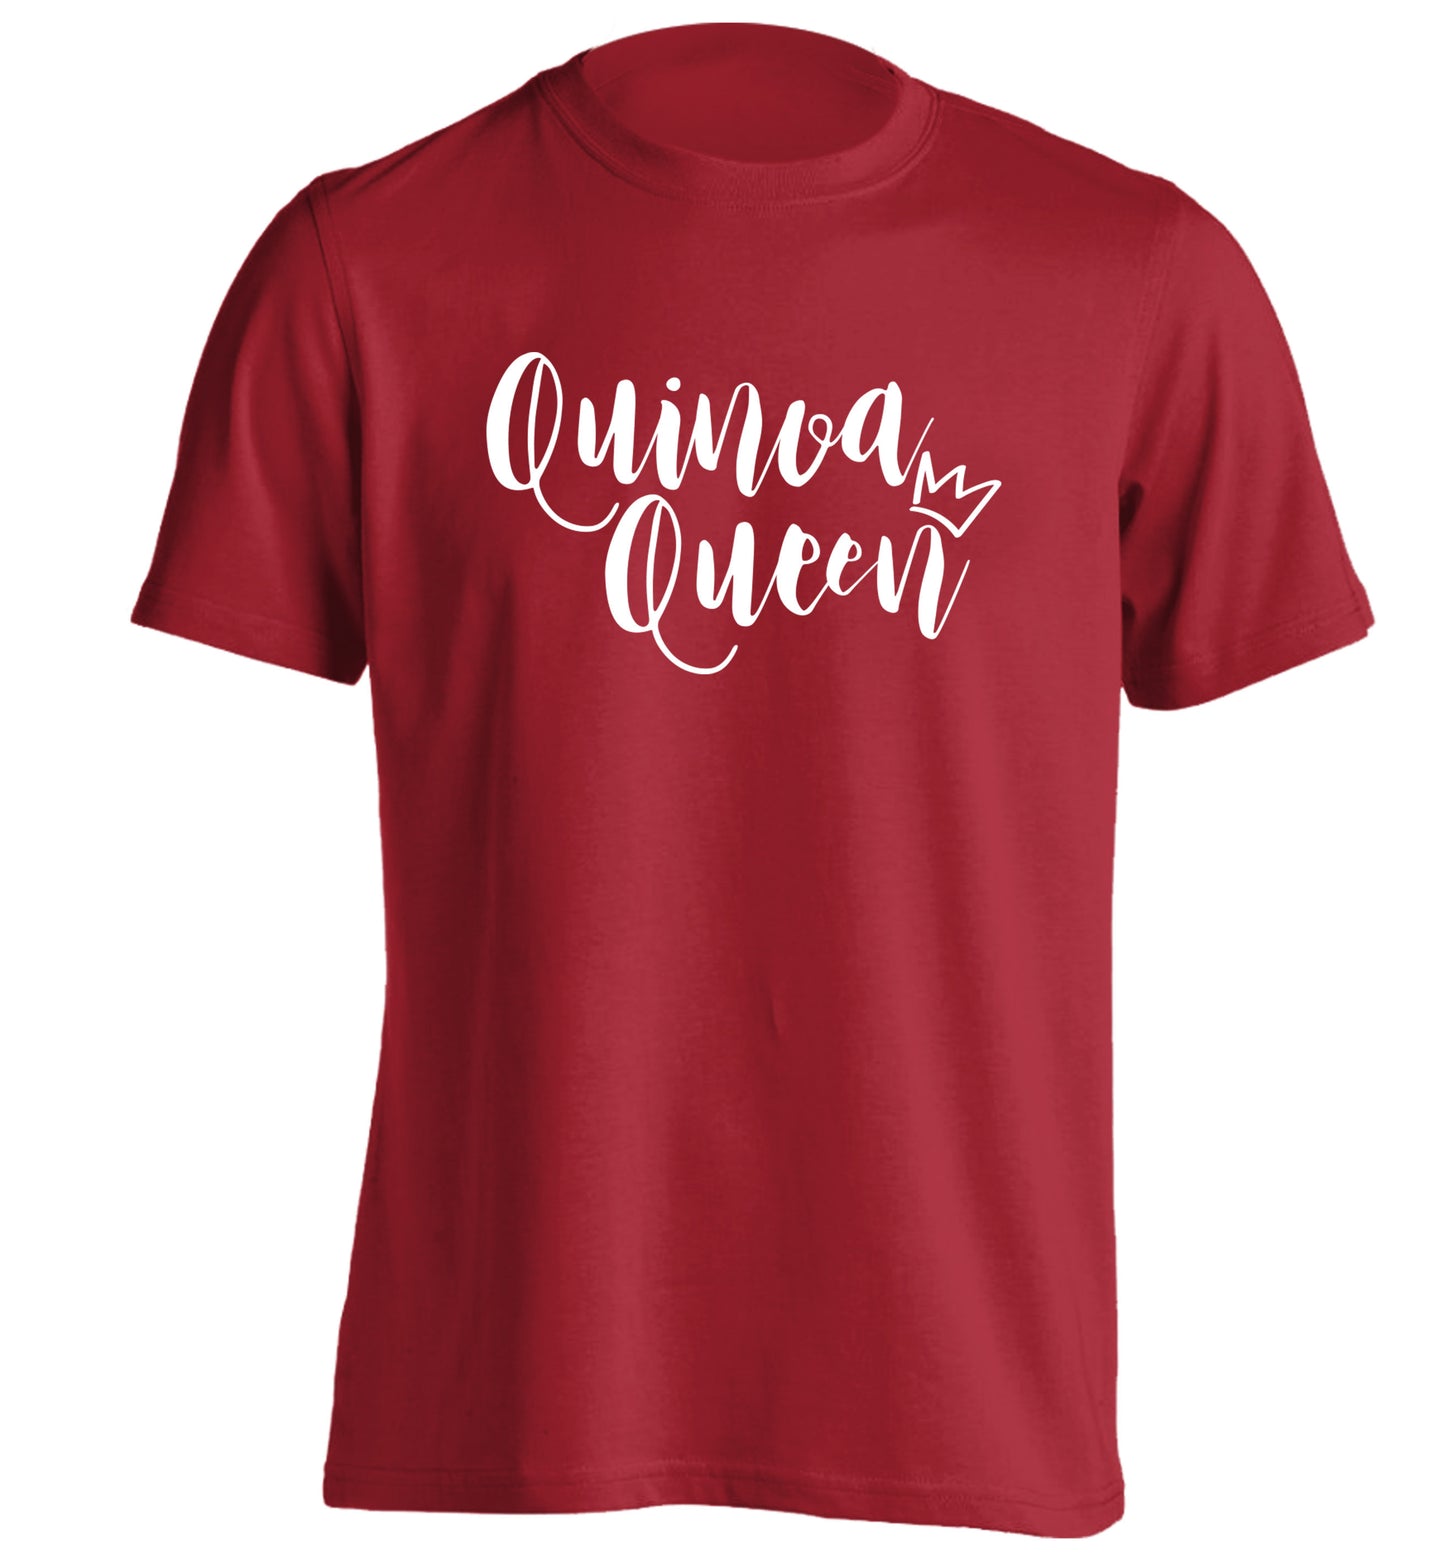 Quinoa Queen adults unisex red Tshirt 2XL